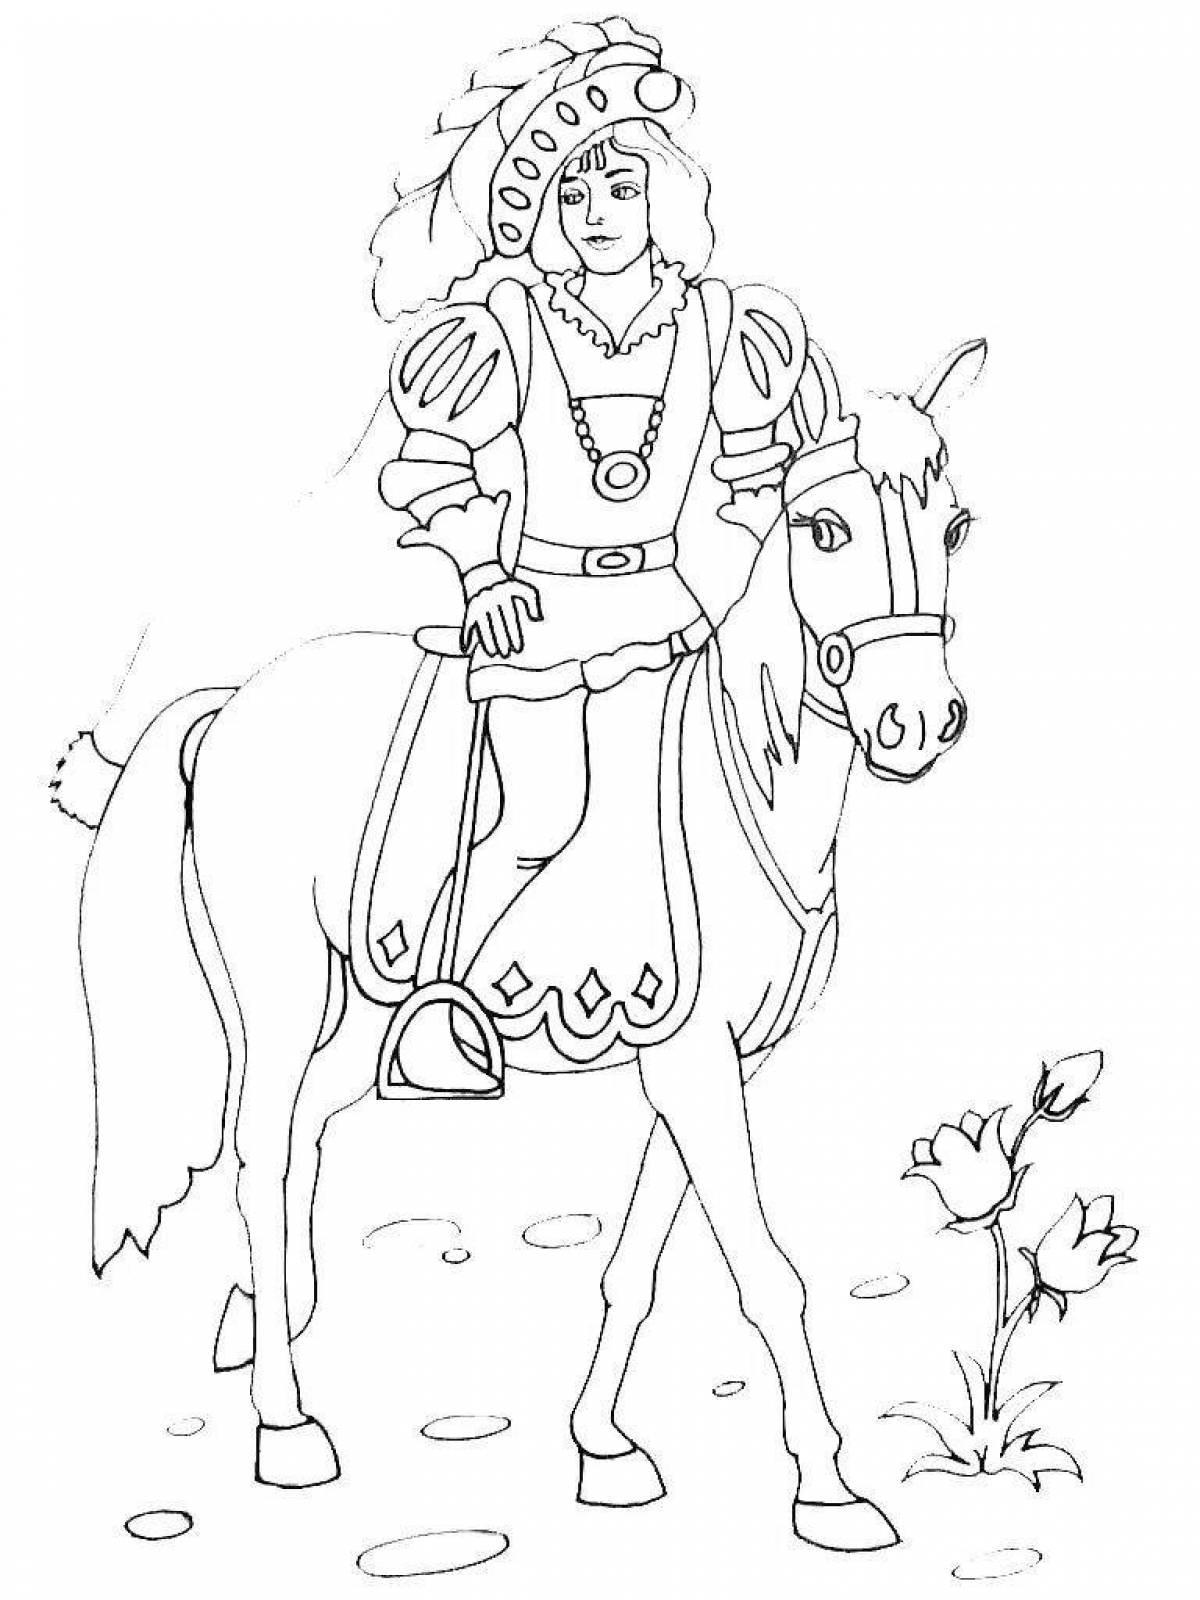 Царевич раскраска. Принц на лошади раскраска. Царевич раскраска для детей. Принцесса на коне раскраска. Принц на коне раскраска.